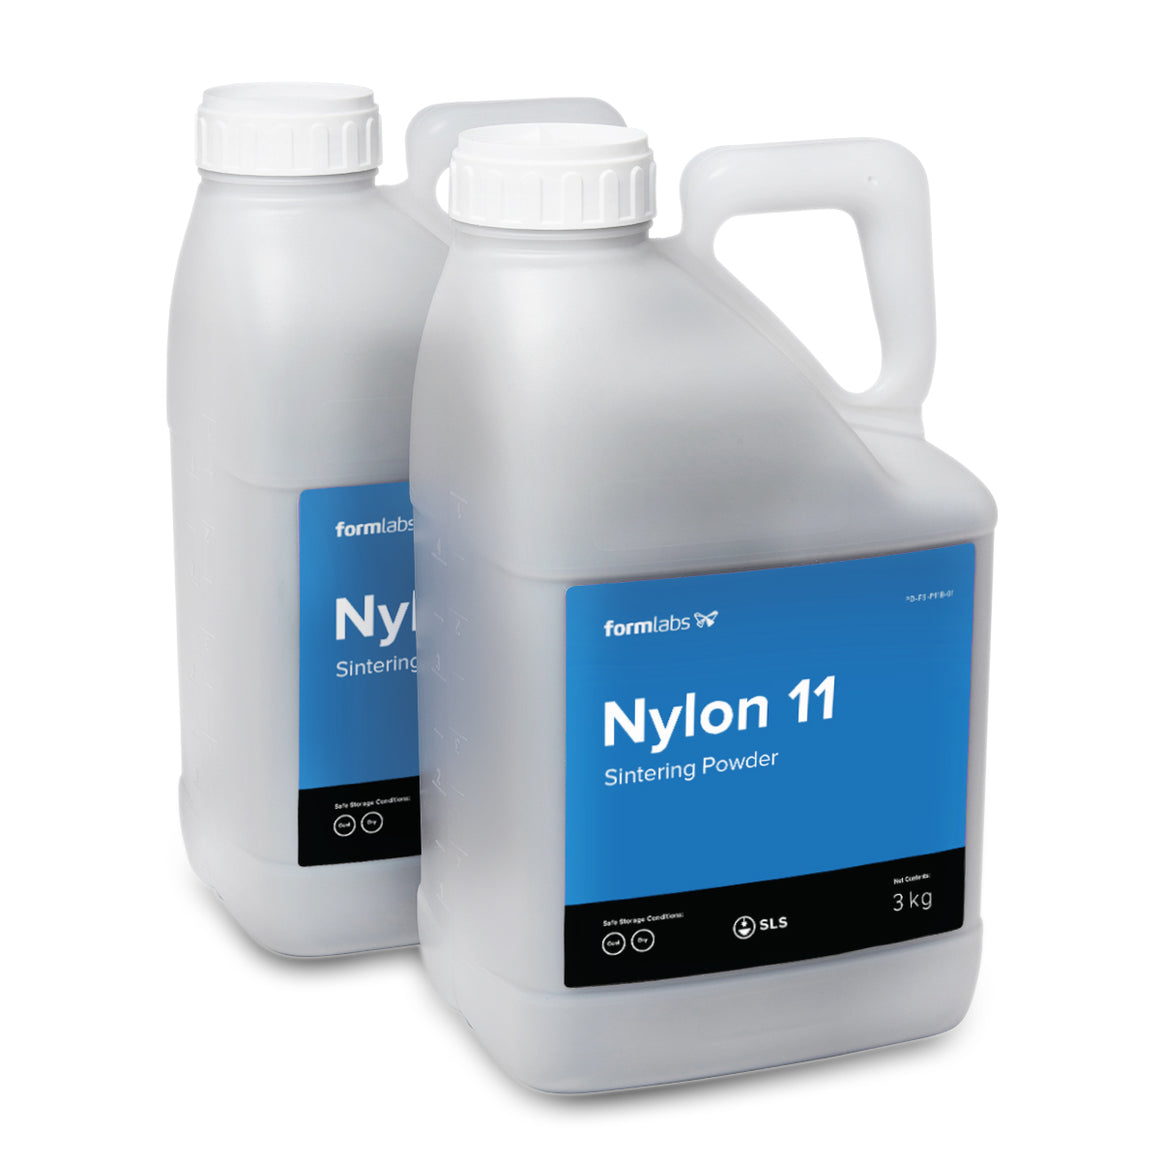 Formlabs Nylon 11 Powder for Fuse 1 (6kg)